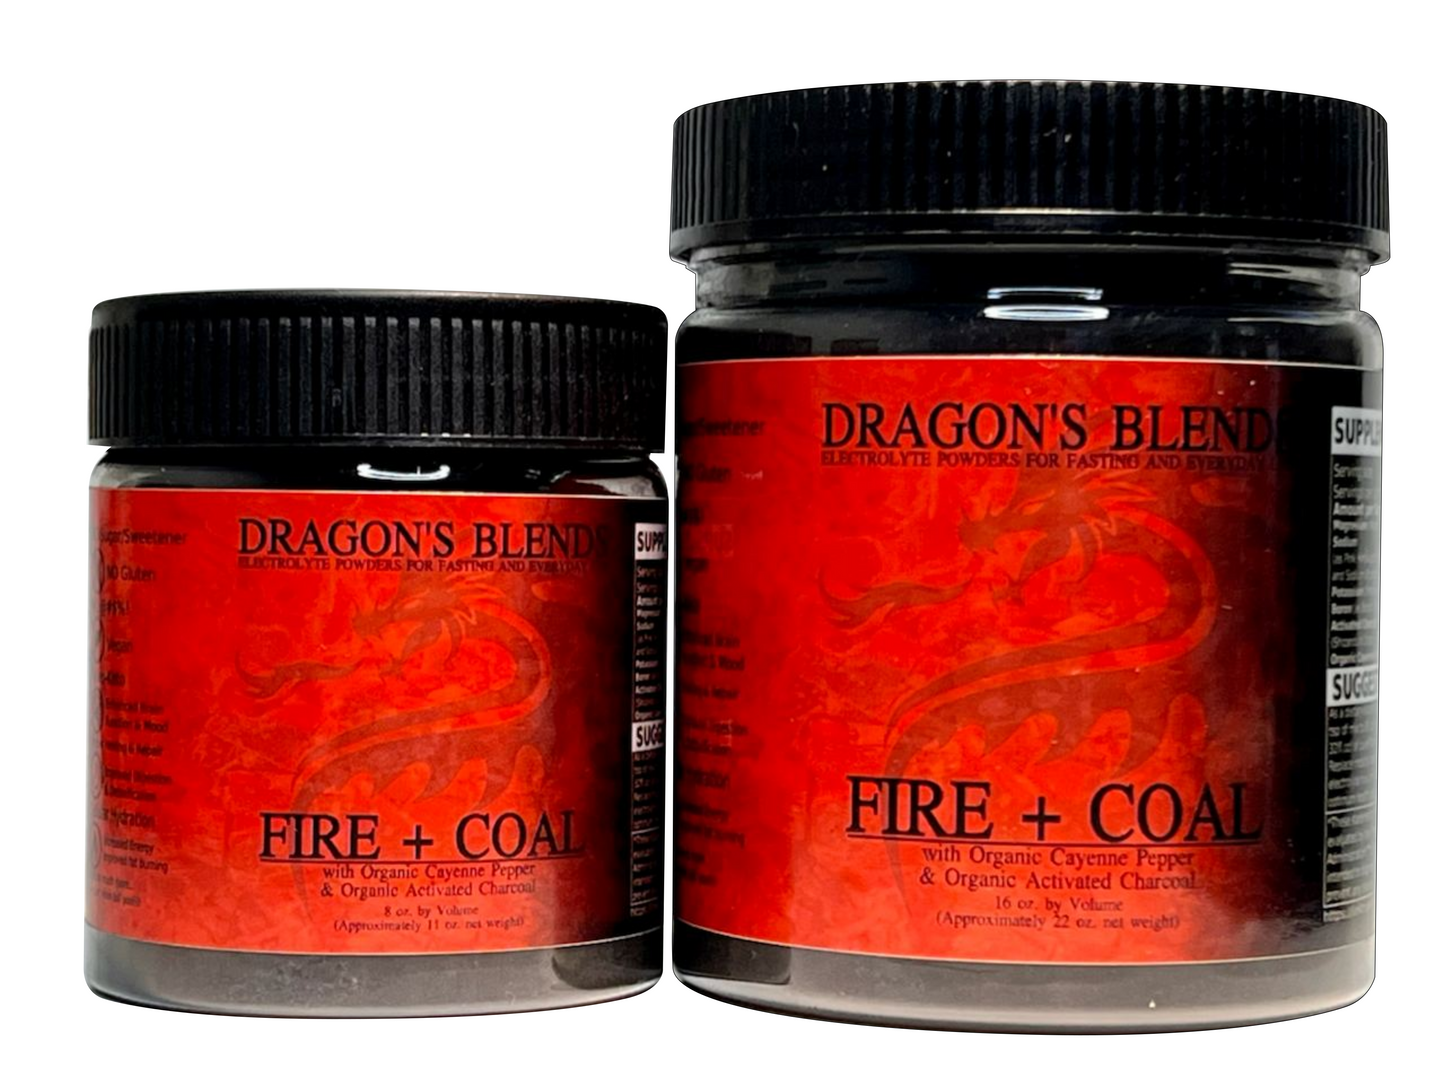 DRAGON'S FIRE+COAL